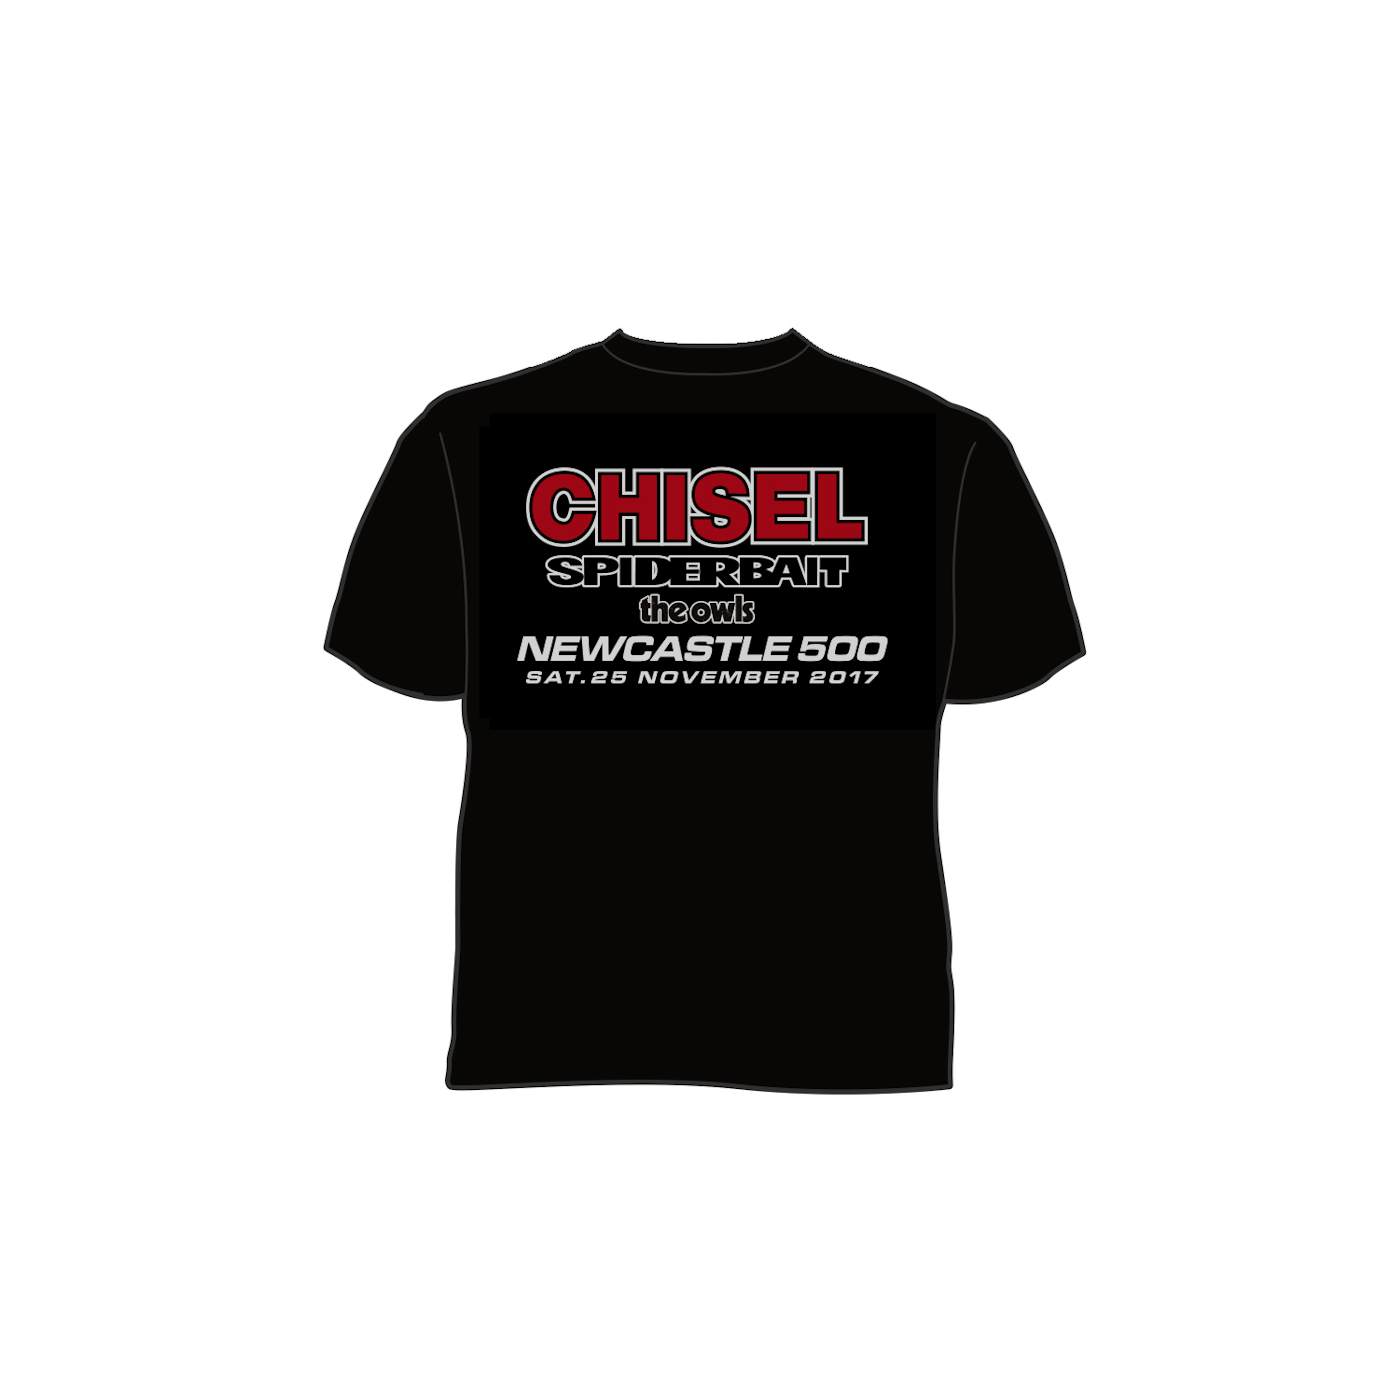 Cold Chisel Newcastle 500 Event Black Tshirt (25th November 2017)